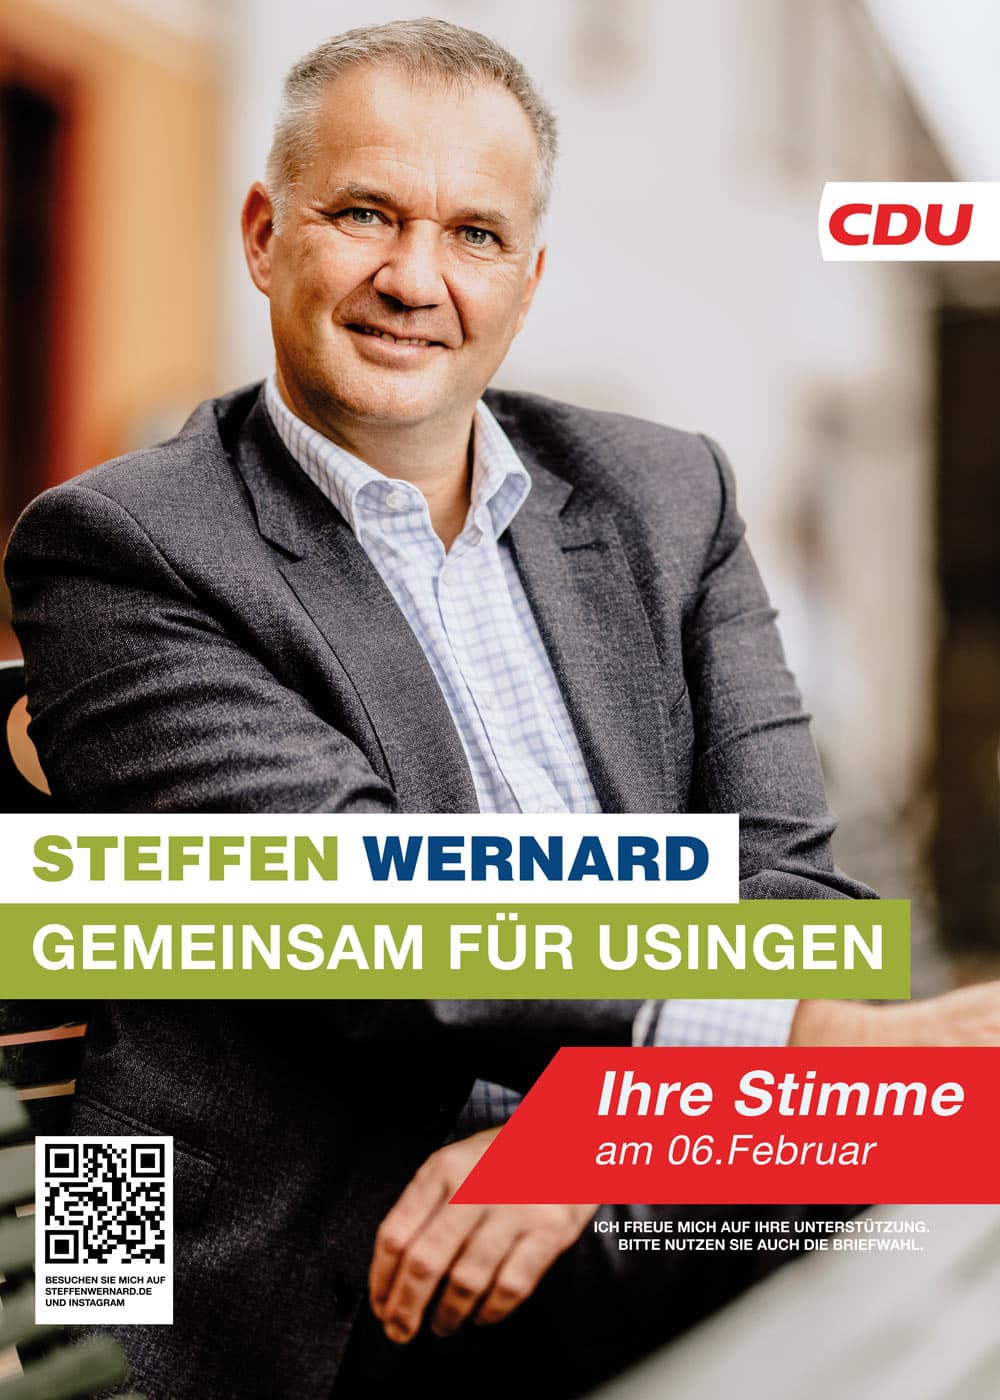 Steffen Wernard Bürgermeister Wahlkampf Wahlplakat 2021 hochkant